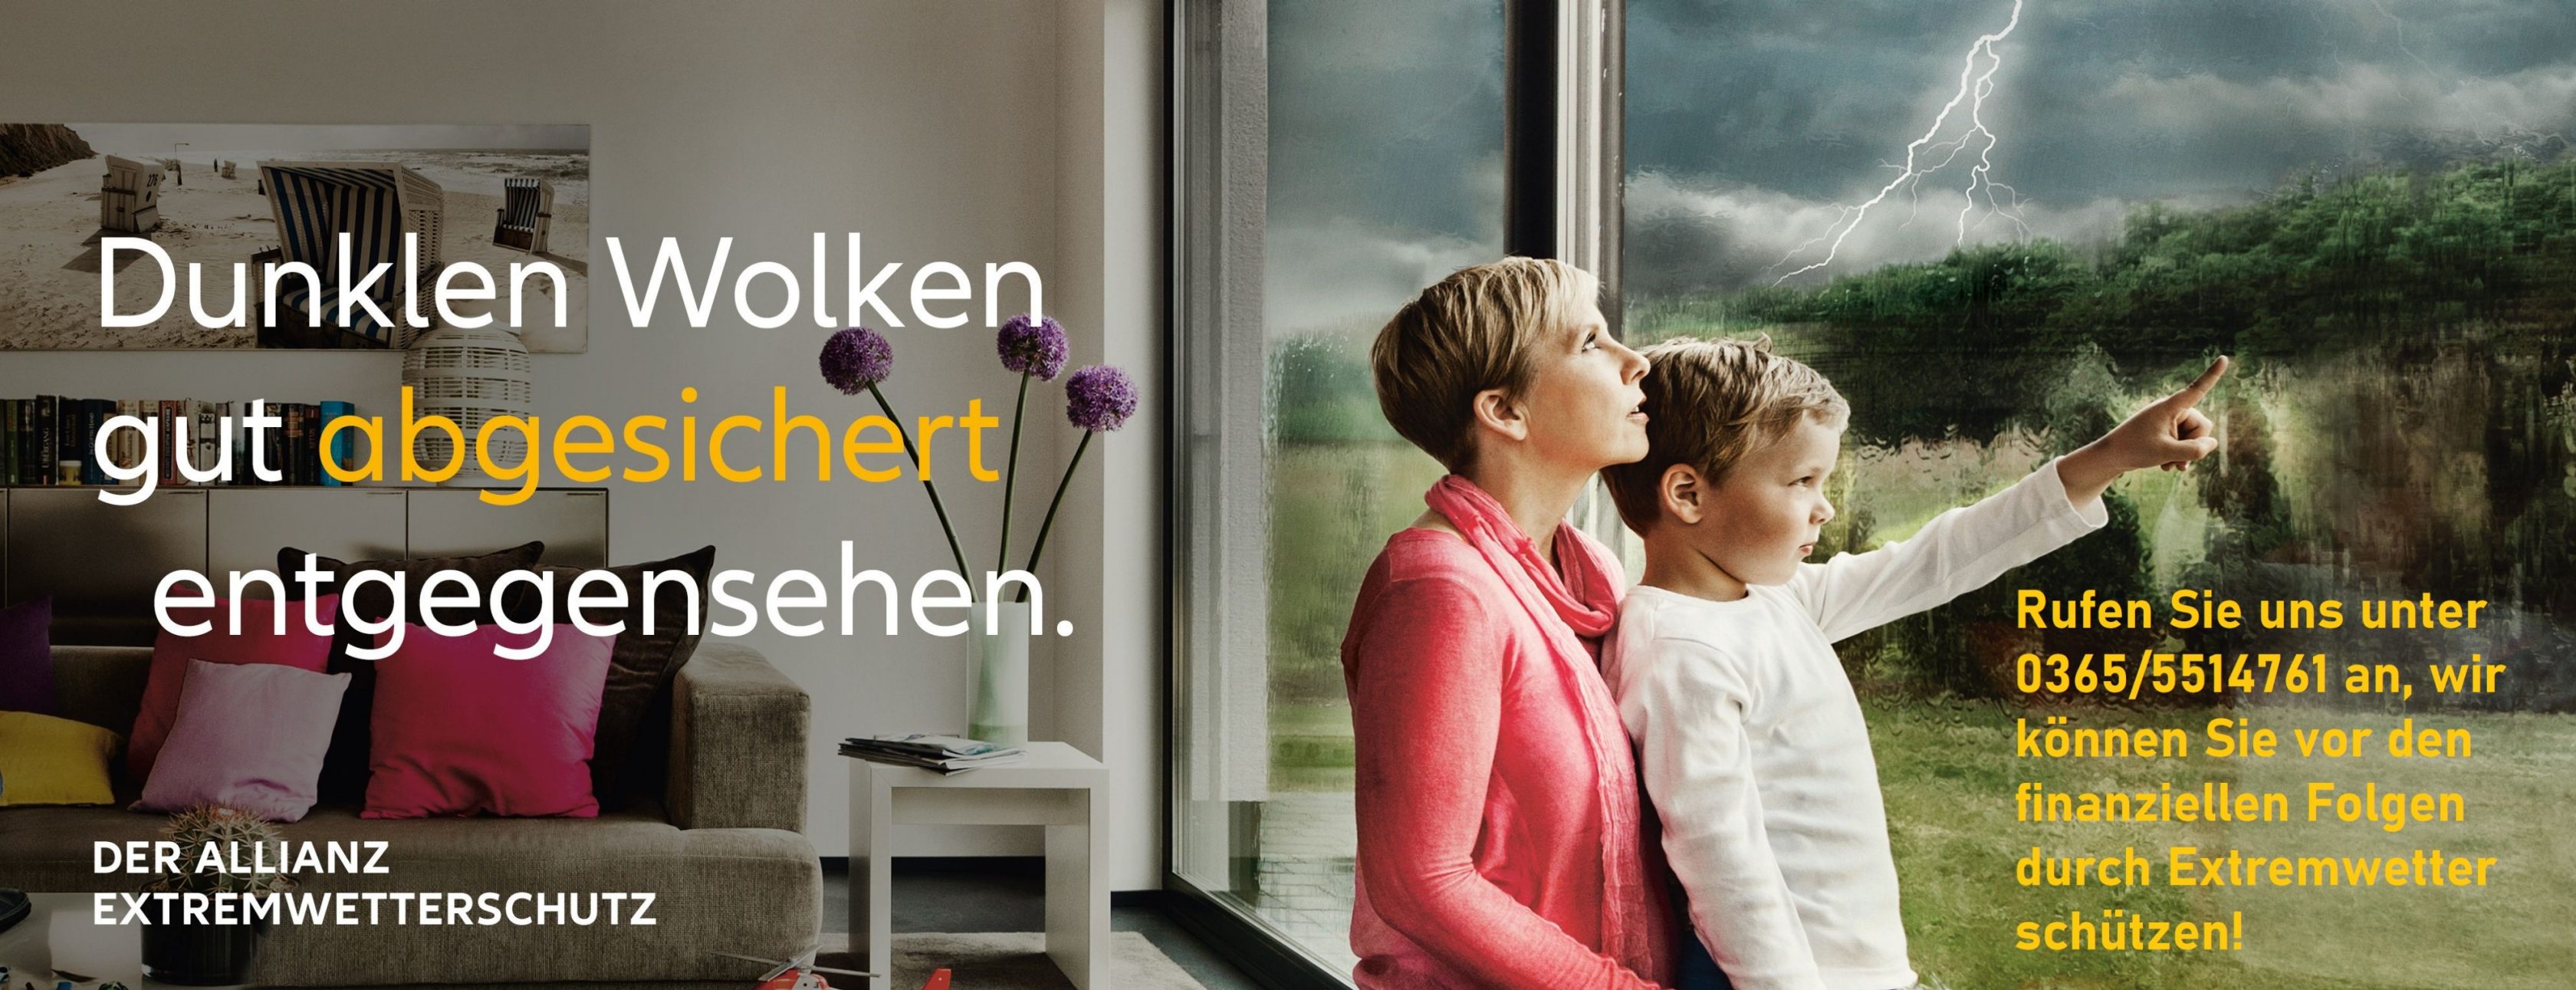 Allianz Versicherung Michael Schumann Gera - Dunklen Wolken gut abgesichert entgegensehen.